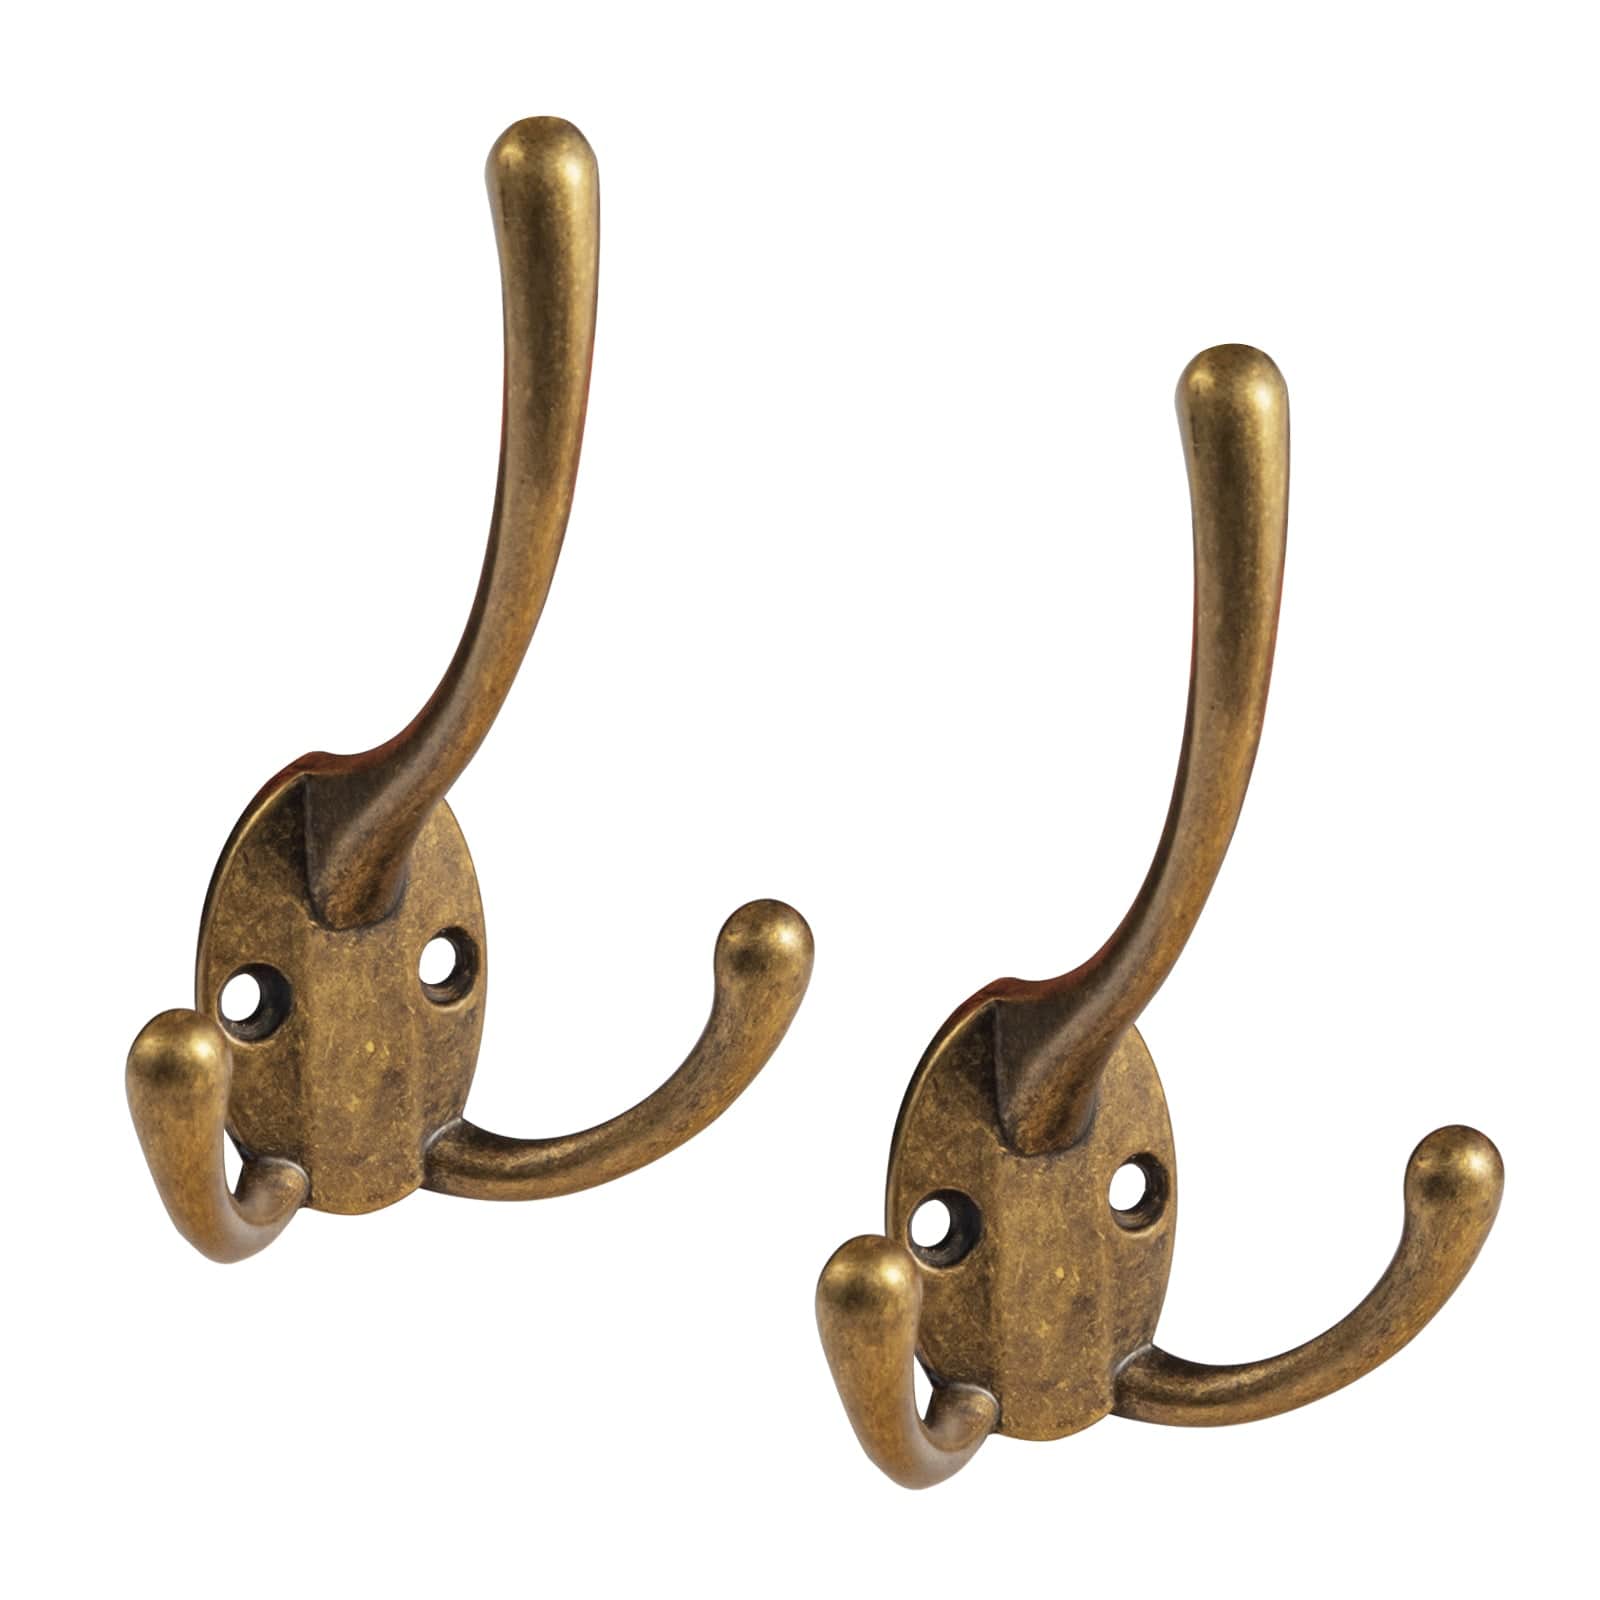 Goo-Ki Antique Brass / 6 Pack Antique Brass Zinc Alloy Triangle Coat Hooks Affordable Luxury Coat Hooks for Bedroom